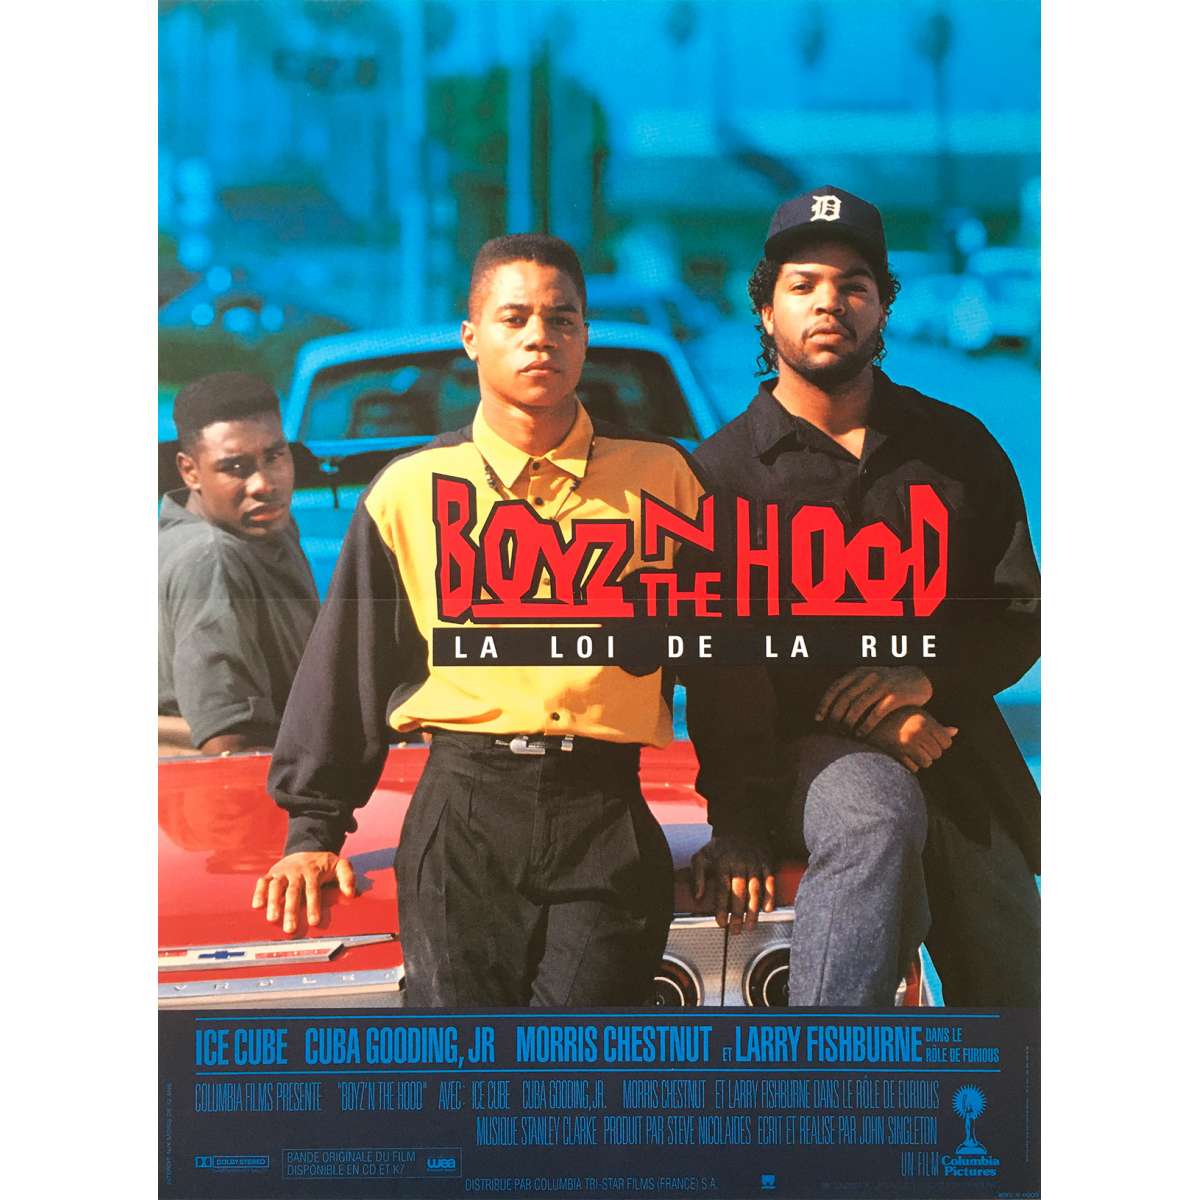 boyz n the hood full free movie